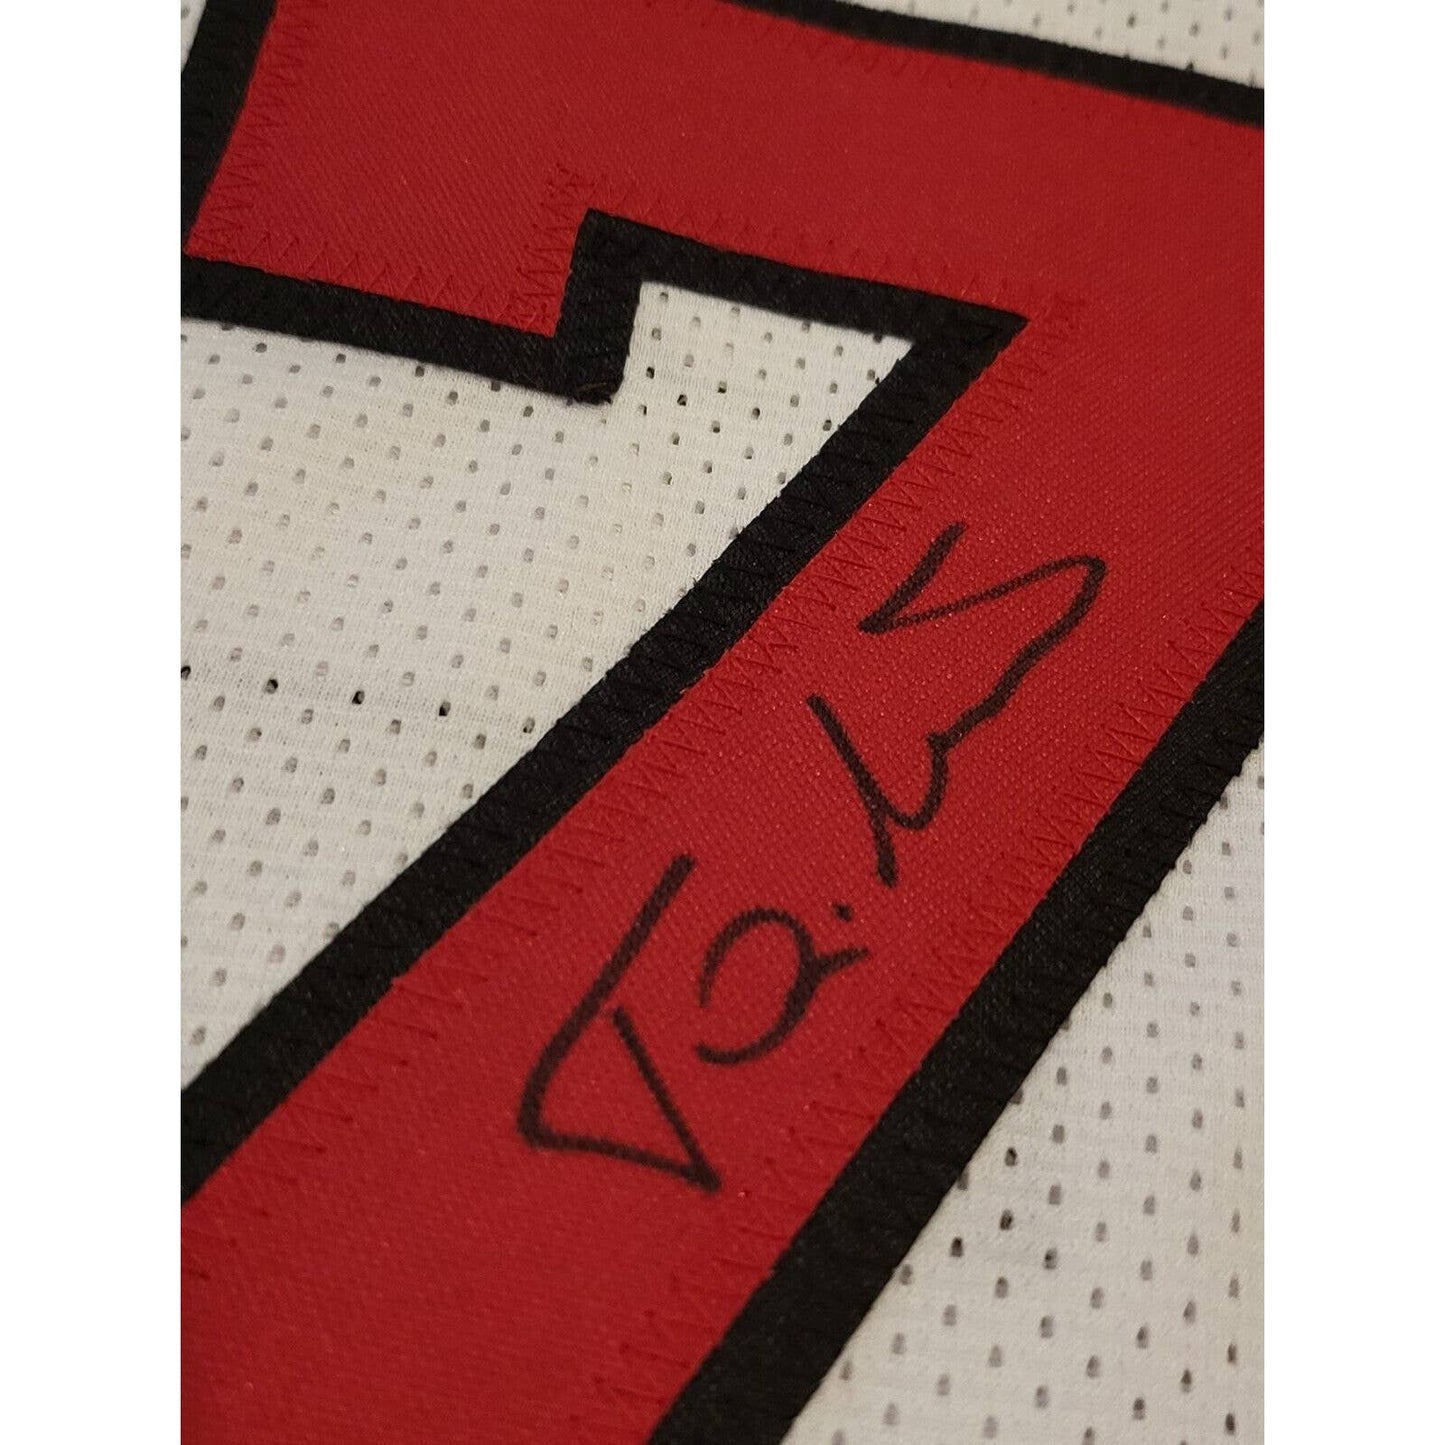 Tony Kukoc Autographed/Signed Jersey Beckett Sticker Chicago Bulls - TreasuresEvolved